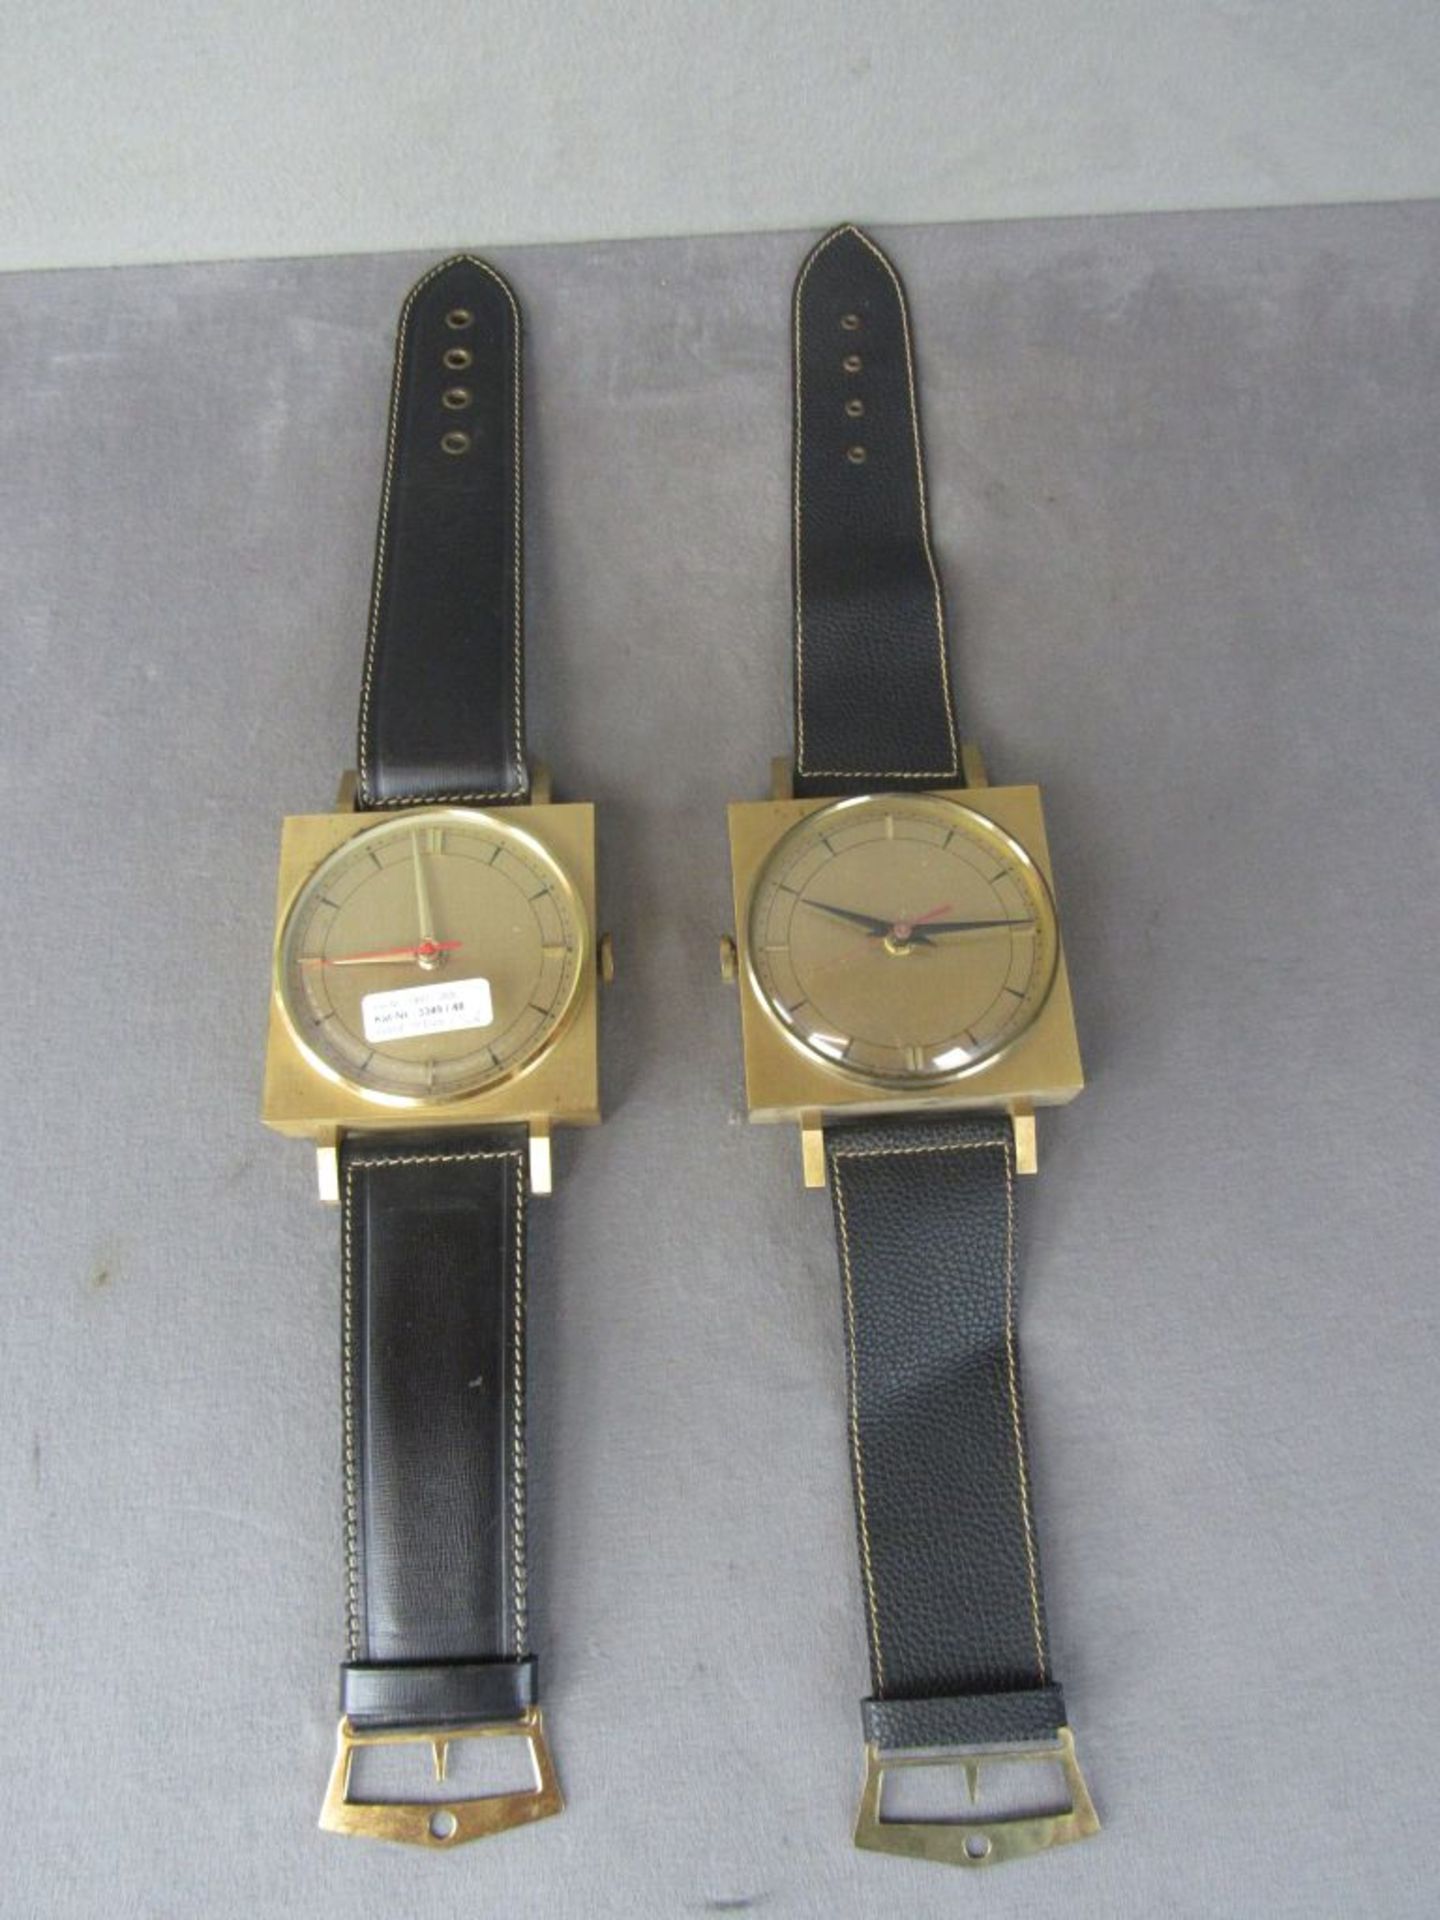 Zwei Wanduhren Vintage Designobjekte Armbanduhren in Großformat Gesamtlänge 75cm